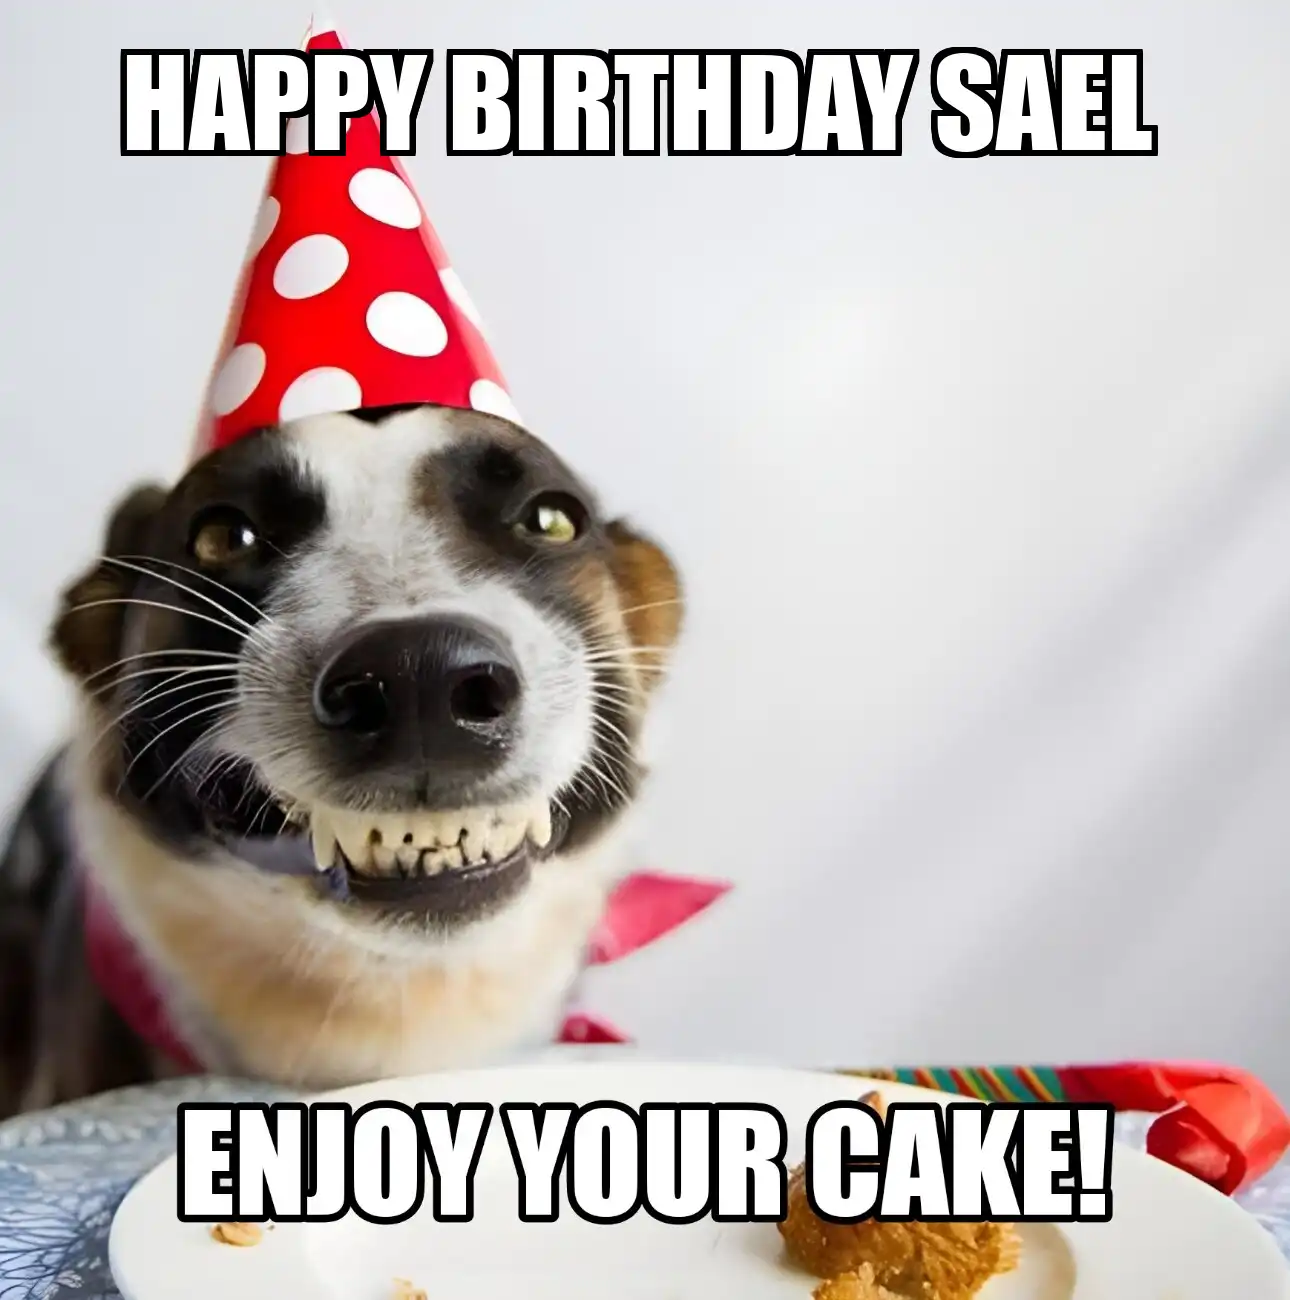 Happy Birthday Sael Enjoy Your Cake Dog Meme